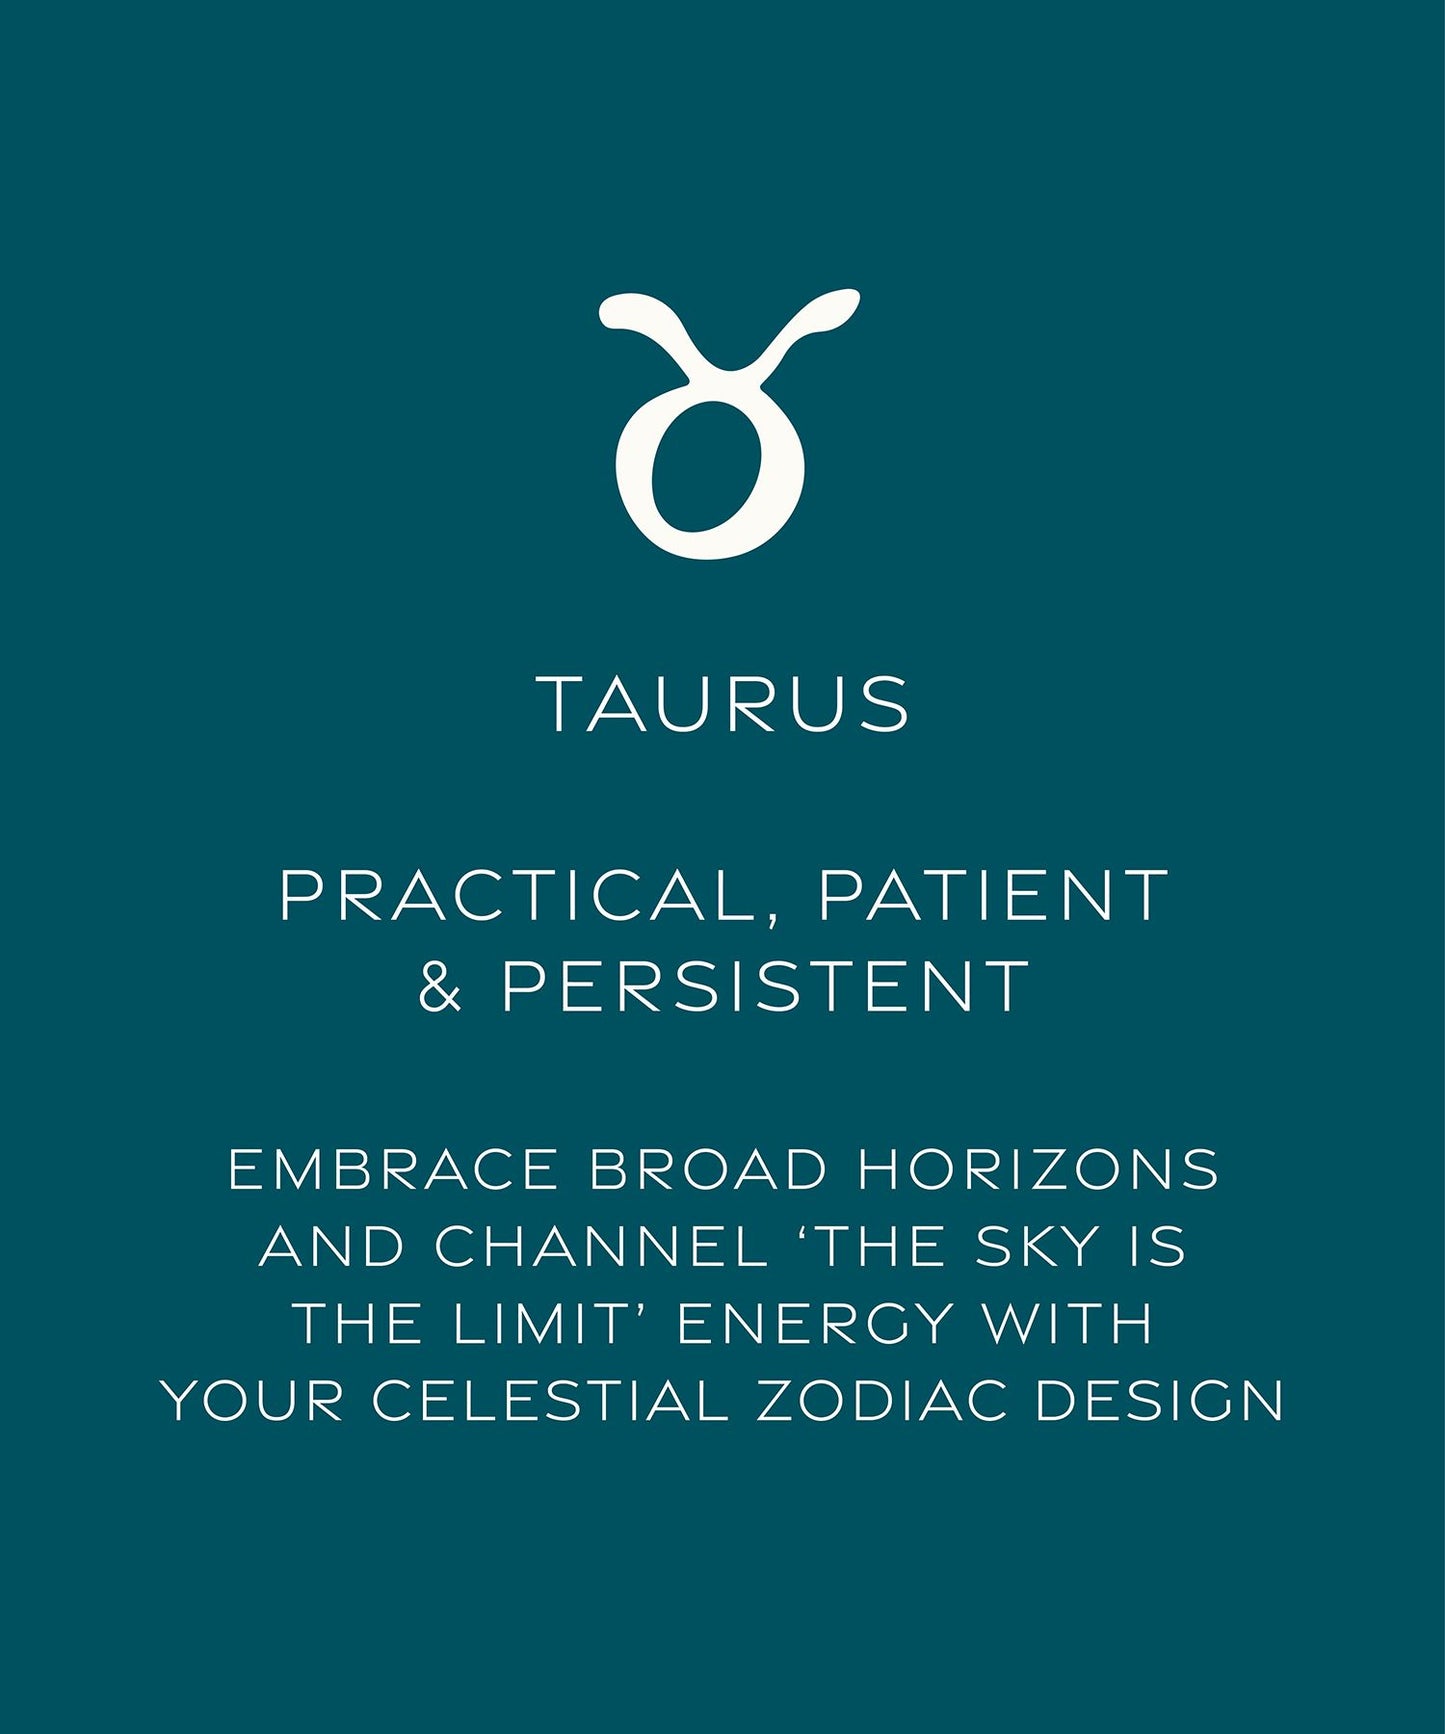 Taurus card